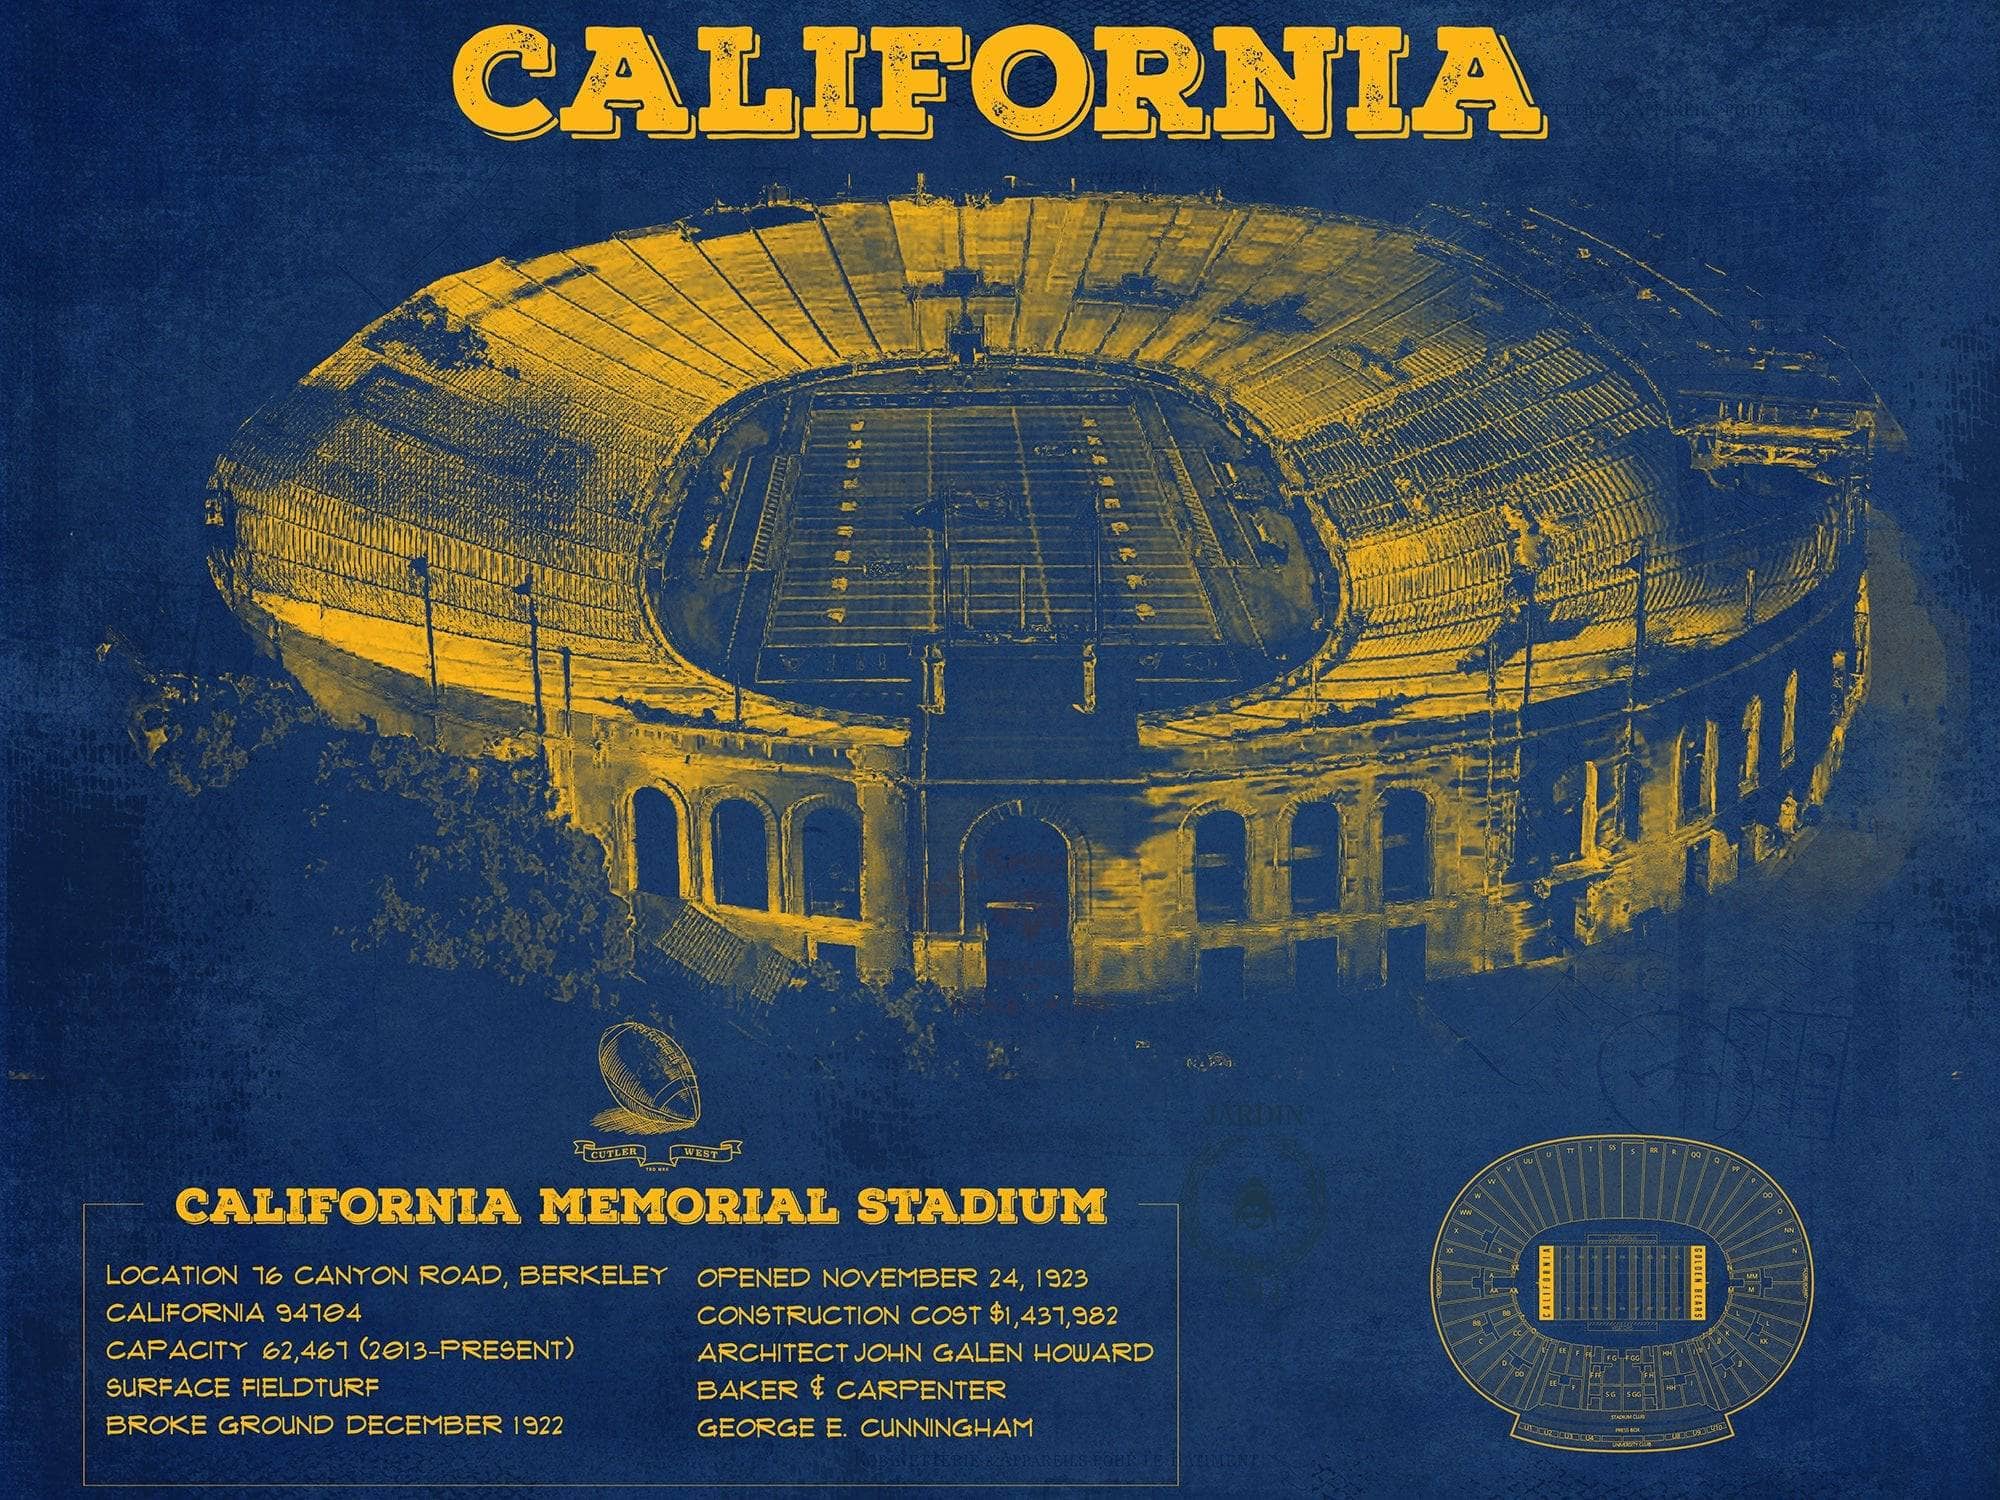 Cutler West College Football Collection 14" x 11" / Unframed California Memorial Stadium Poster - University of California Bears Vintage Stadium & Blueprint Art Print 750877871_45239